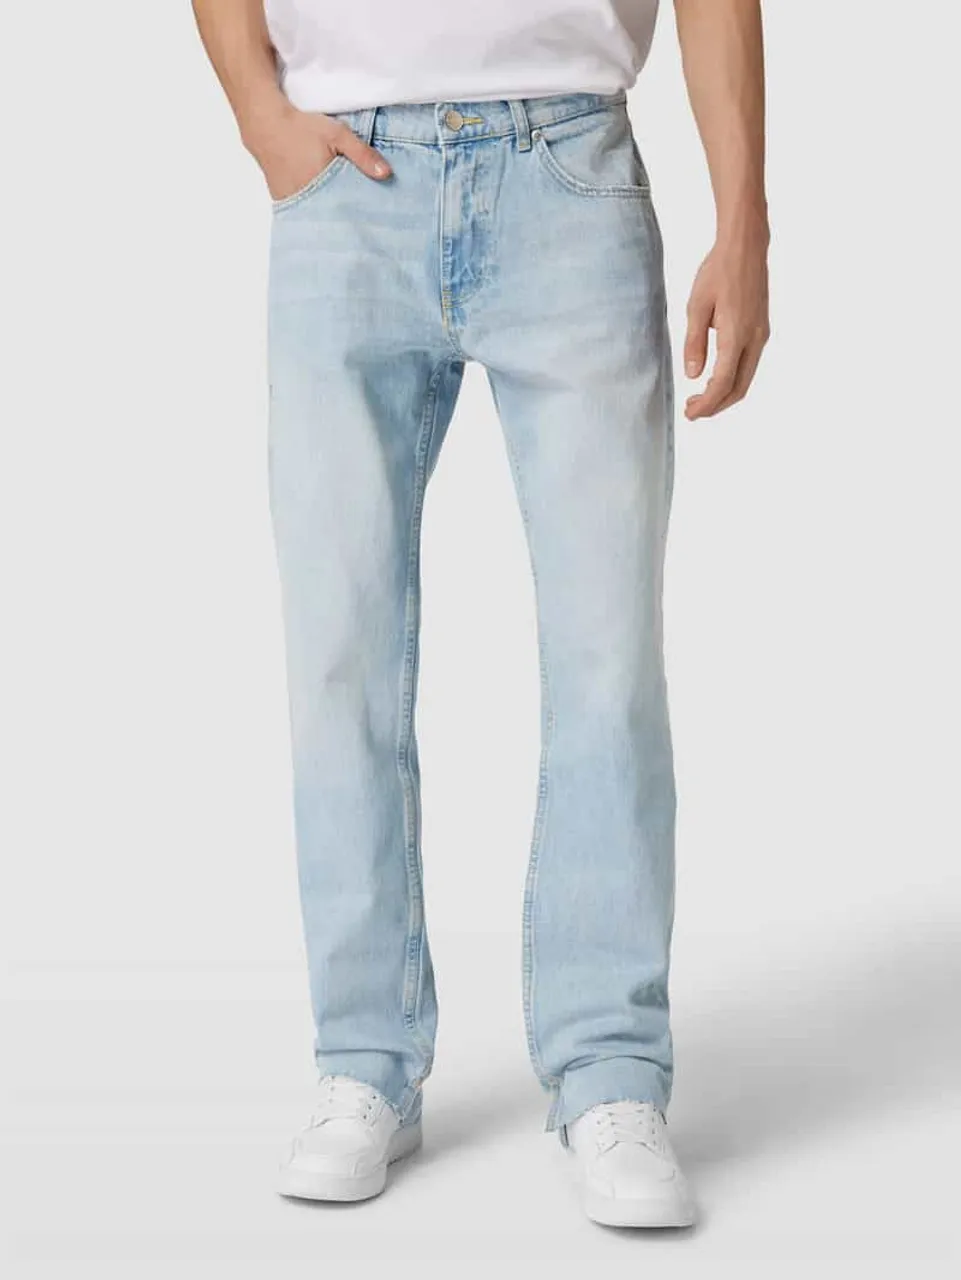 EIGHTYFIVE Jeans im 5-Pocket-Design in Jeansblau